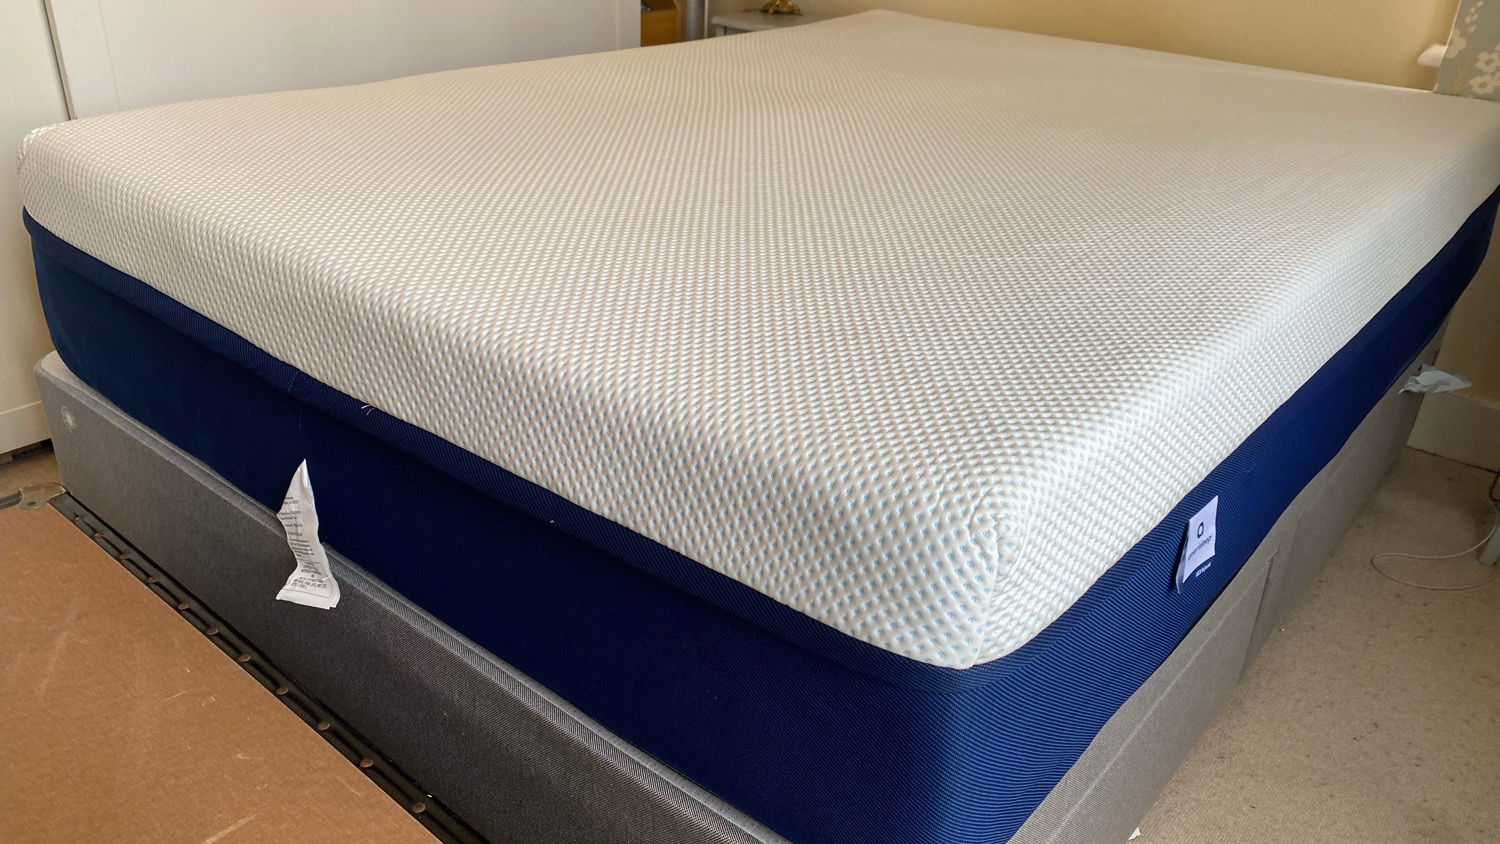 The Amerisleep AS3 Hybrid mattress on a bed